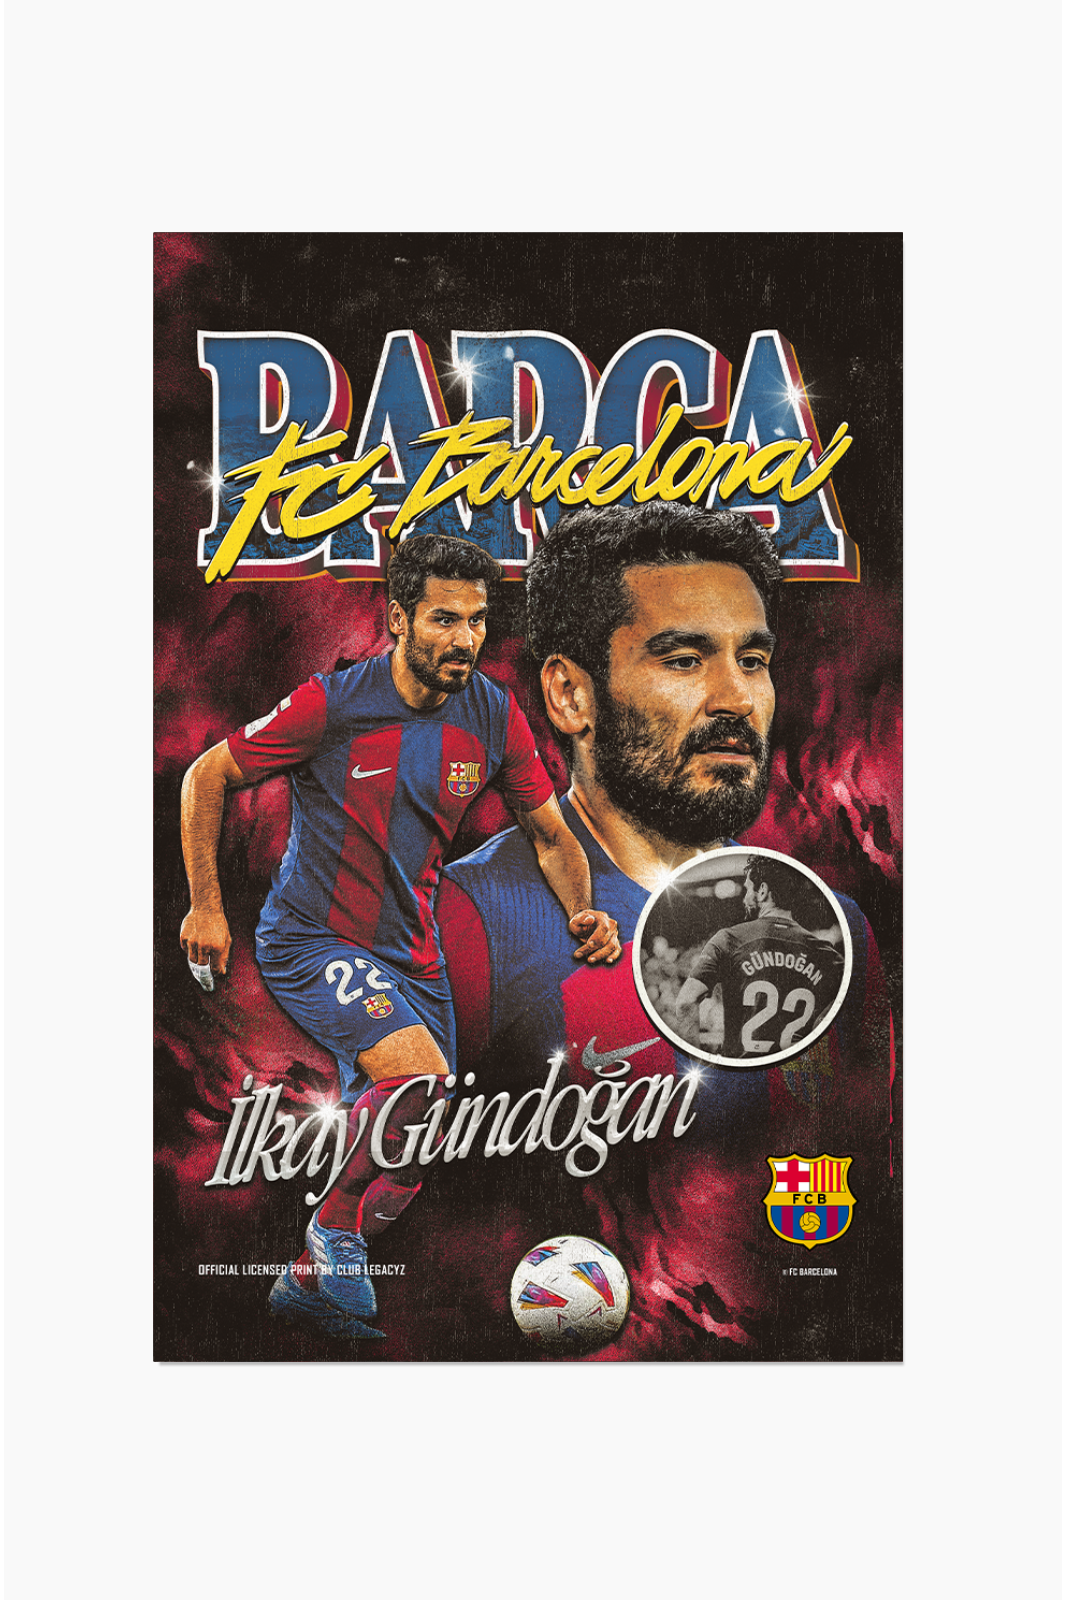 FC Barcelona - İlkay Gündogan Bootleg poster limited to 100